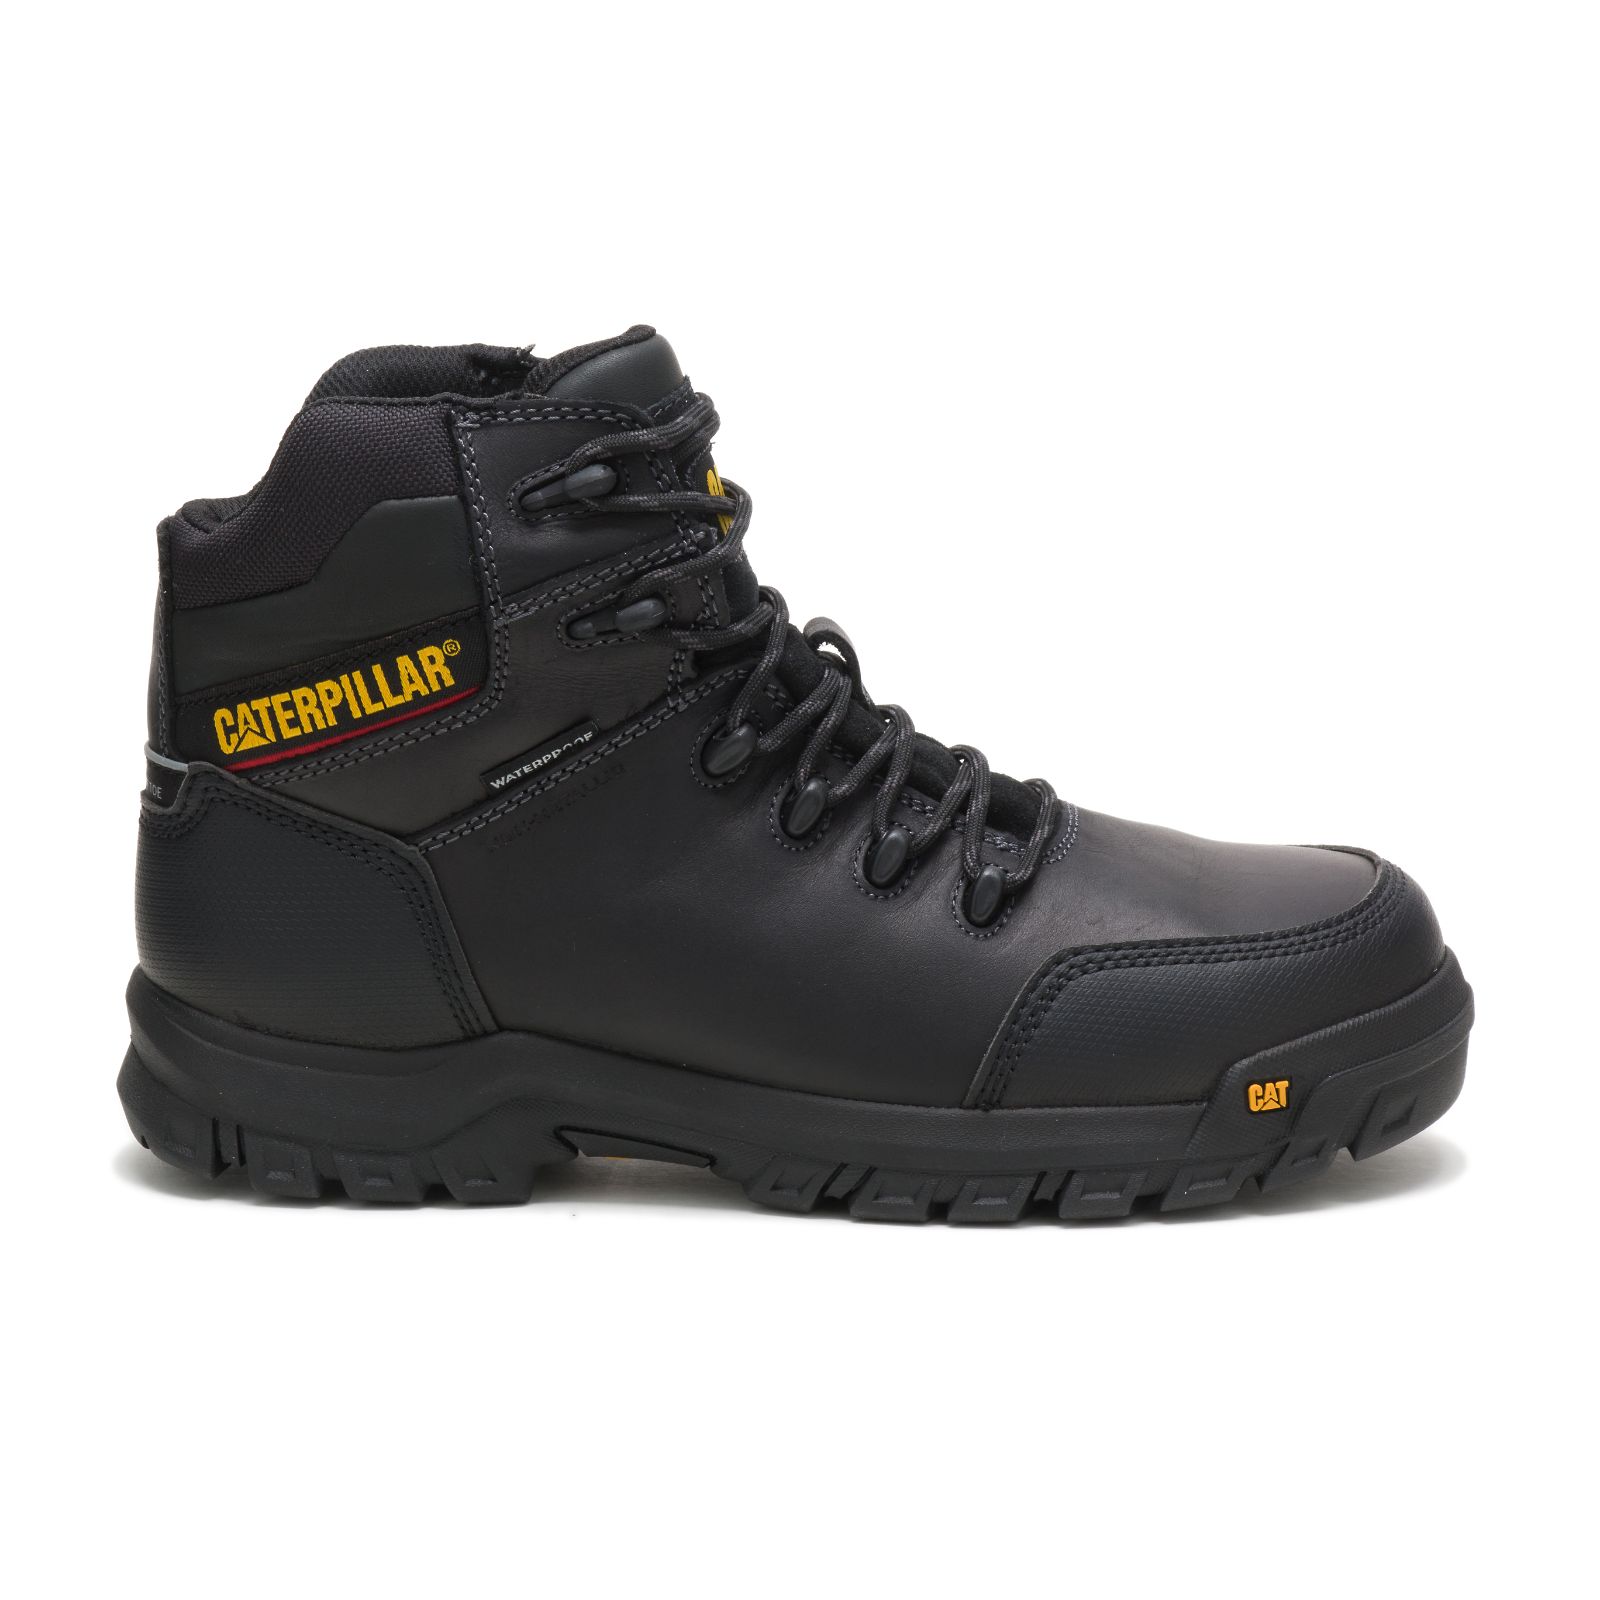 Caterpillar Work Boots UAE Online - Caterpillar Resorption Waterproof Composite Toe Mens - Black WJZBIX781